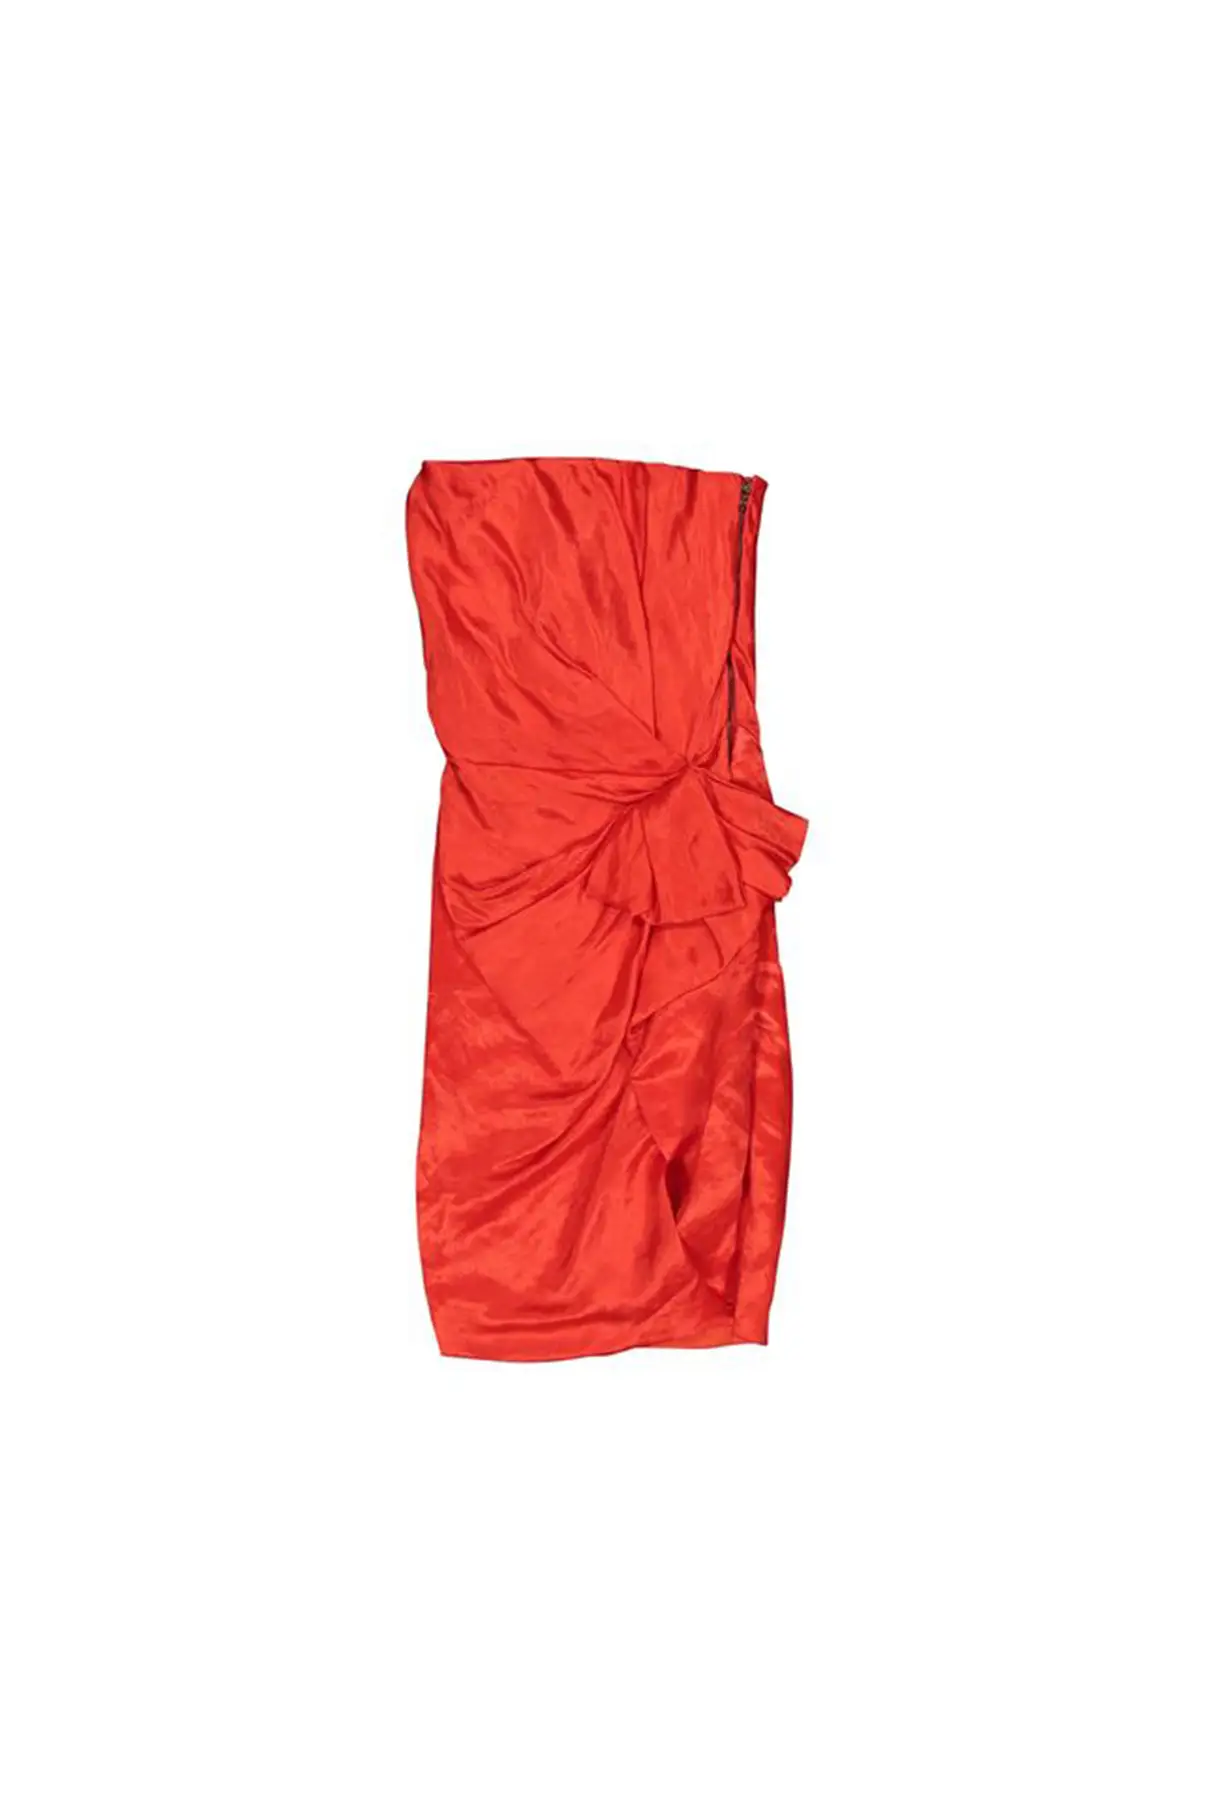 lanvin-dress-in-polyester-red.jpg